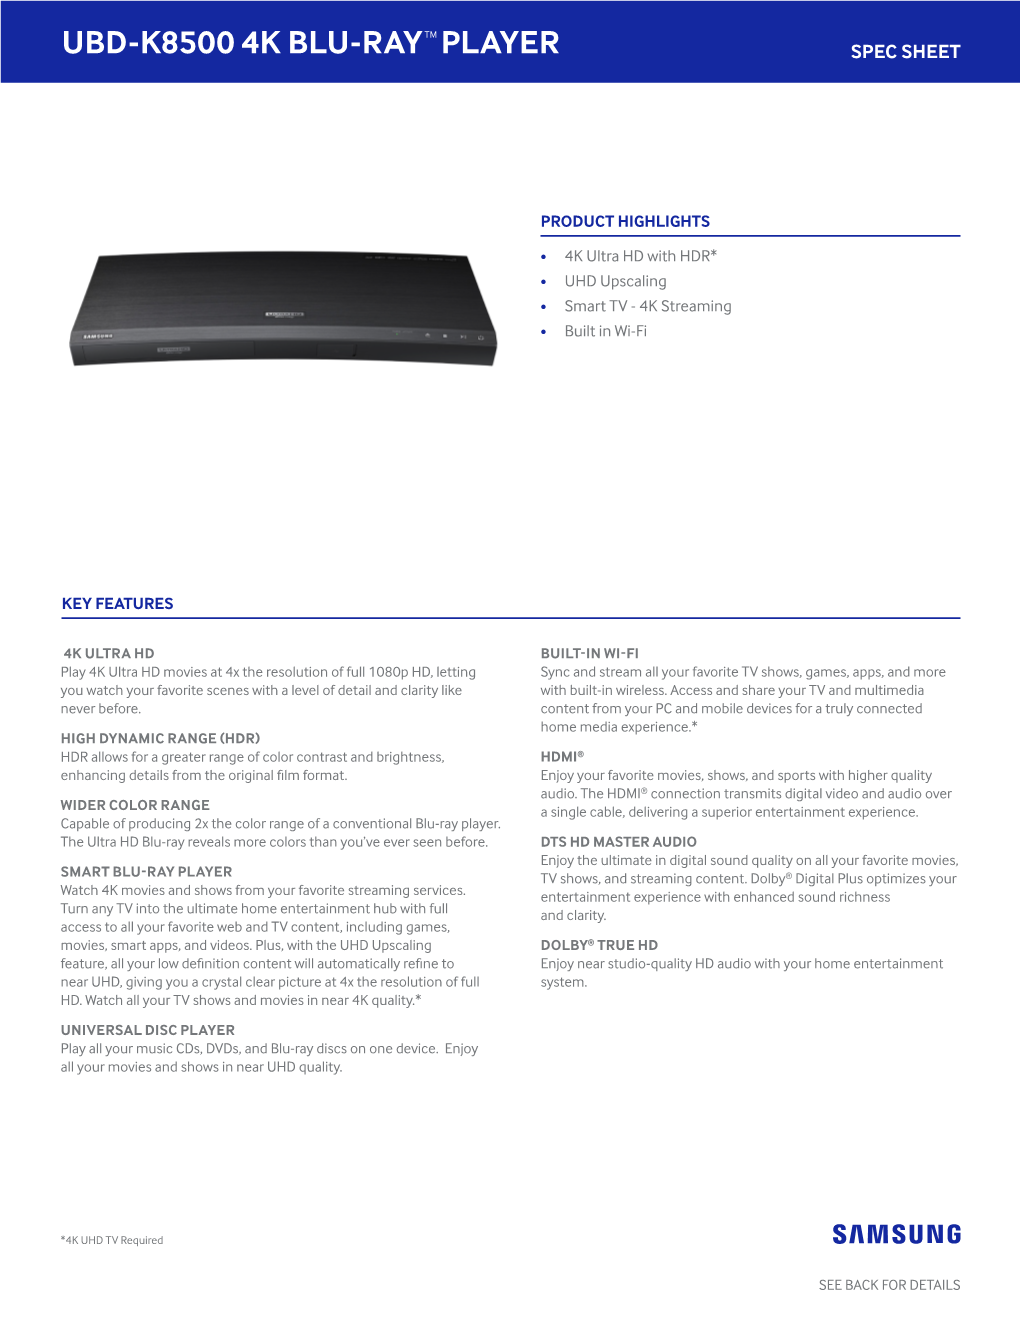 Samsung 4K UHD Blu-Ray Player Specs